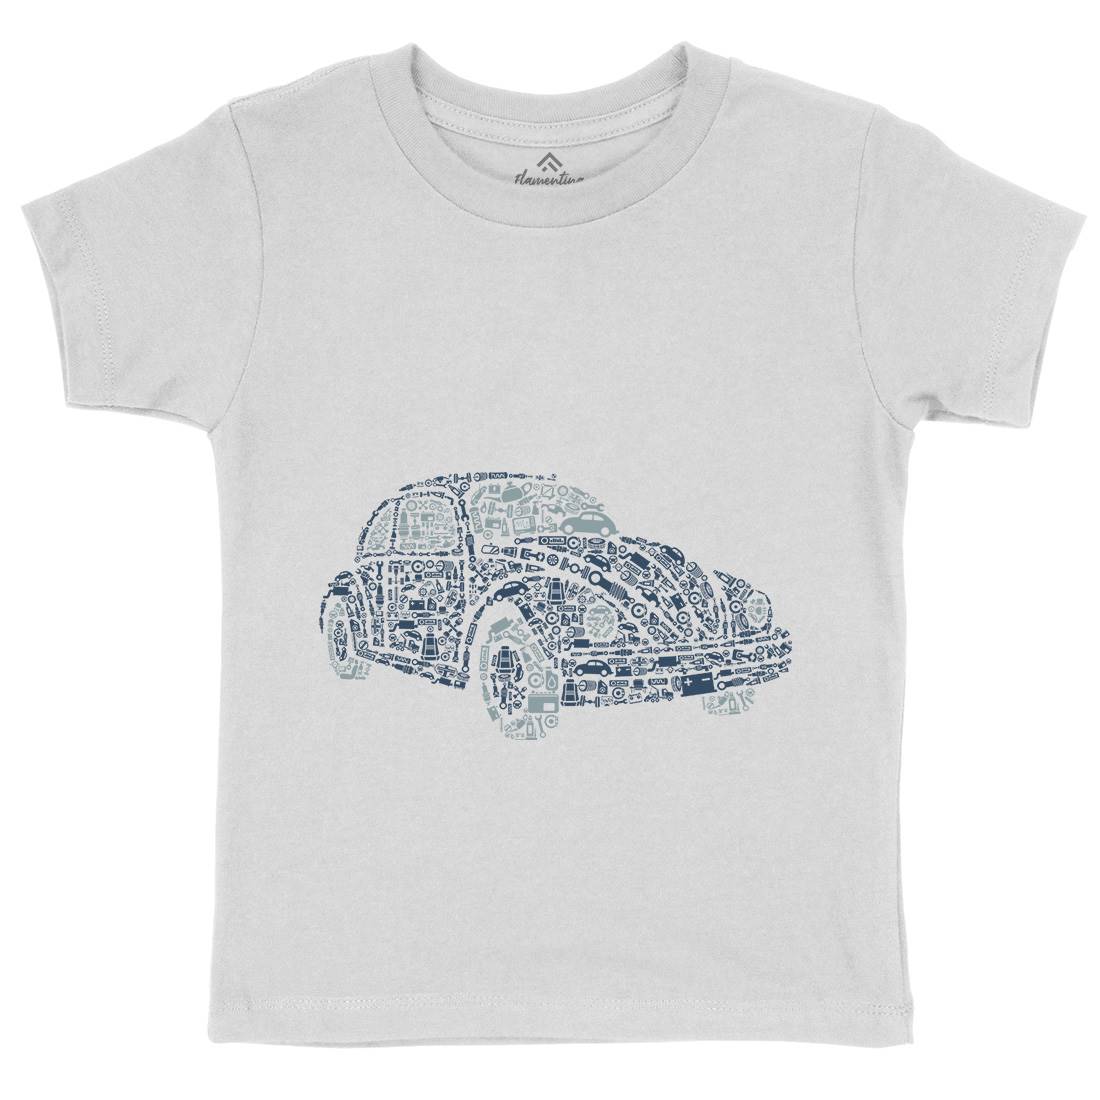 Beetle Kids Crew Neck T-Shirt Cars B009